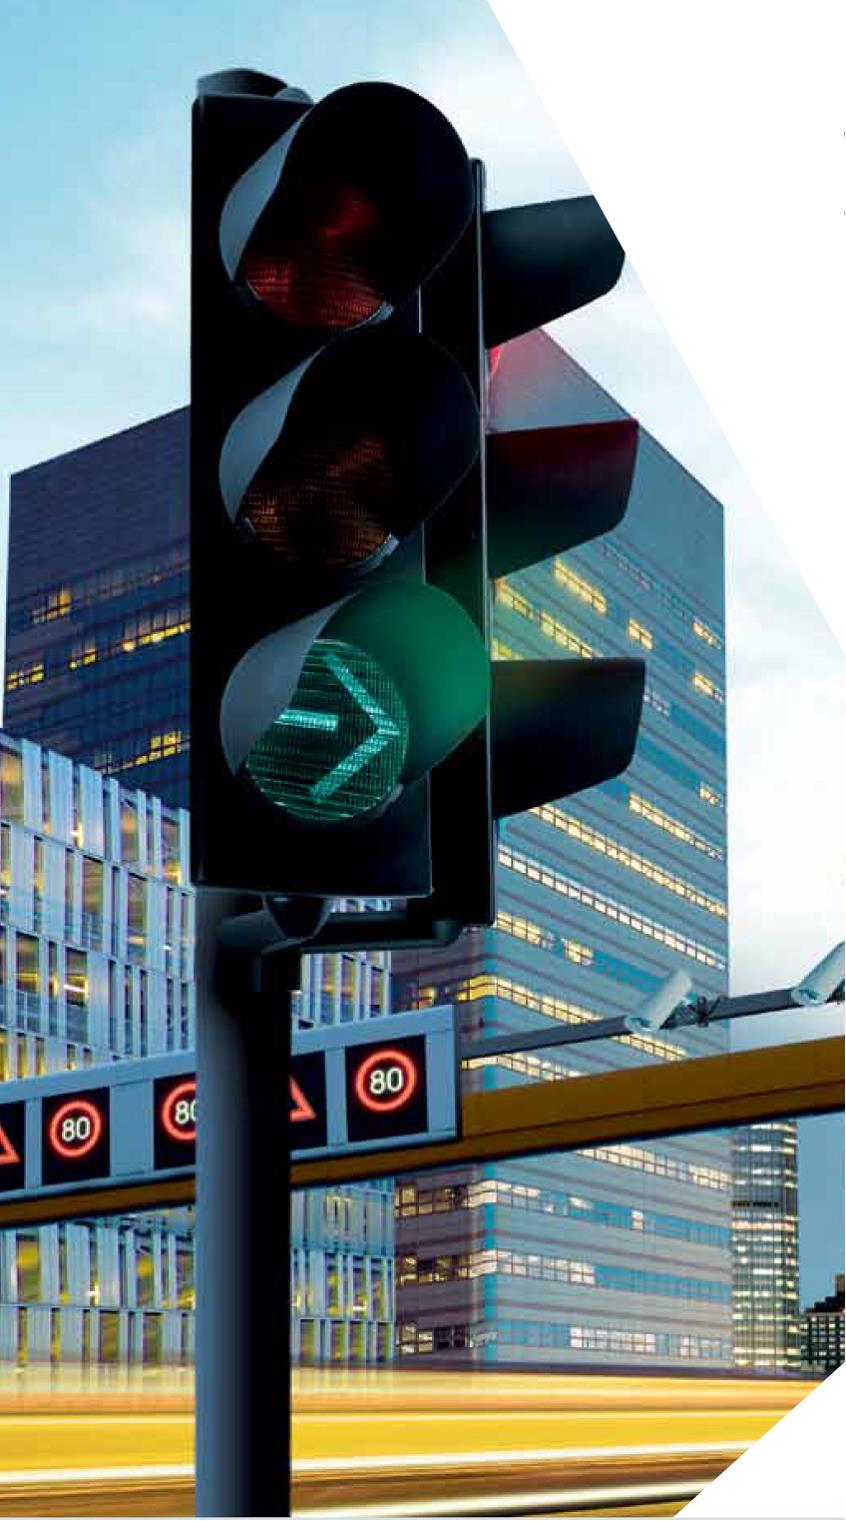 Traffic light priority system in Ludwigsburg